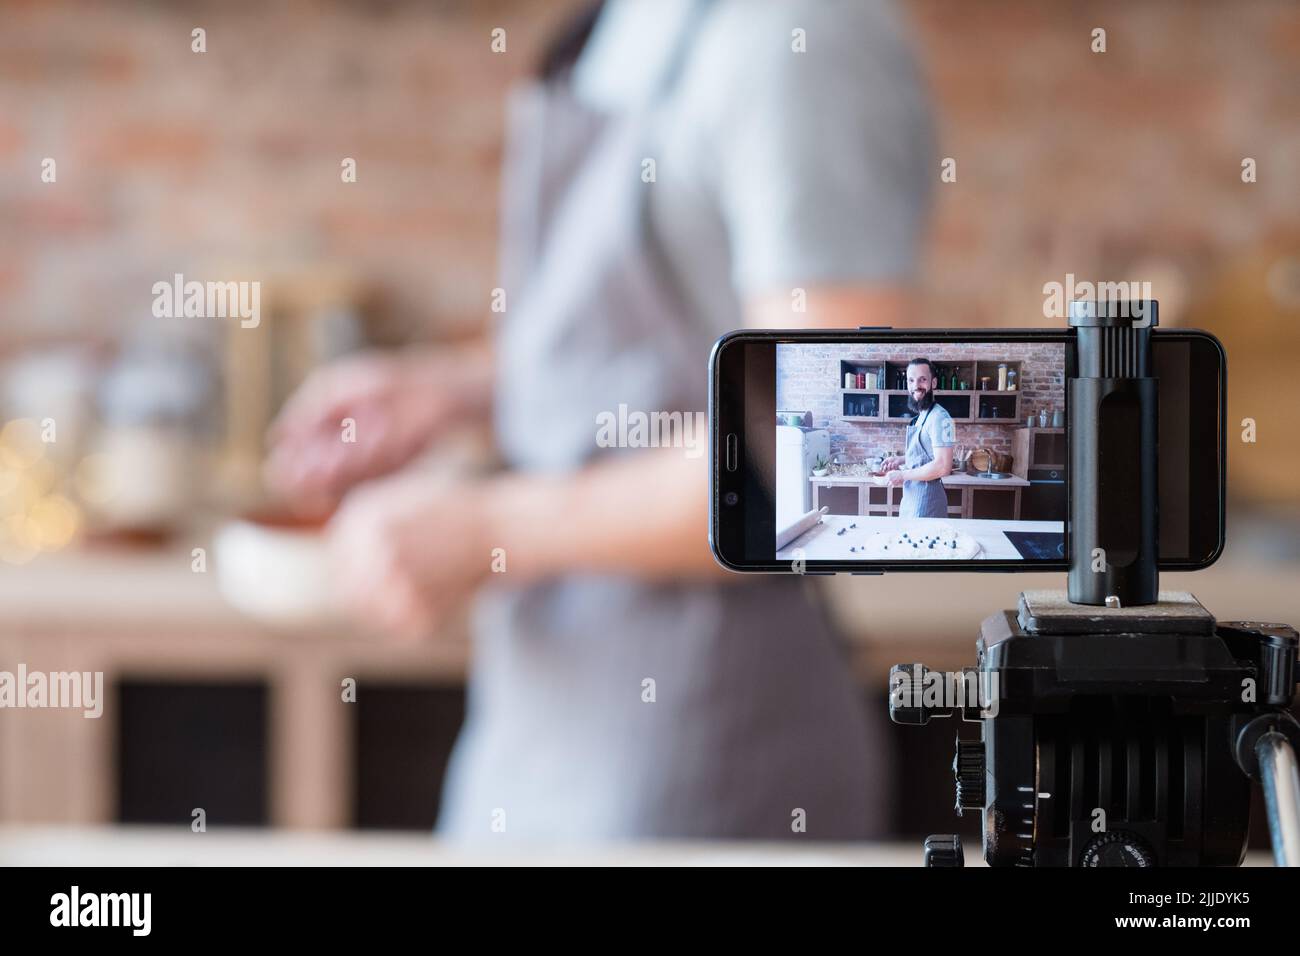 online culinary show phone camera video stream Stock Photo